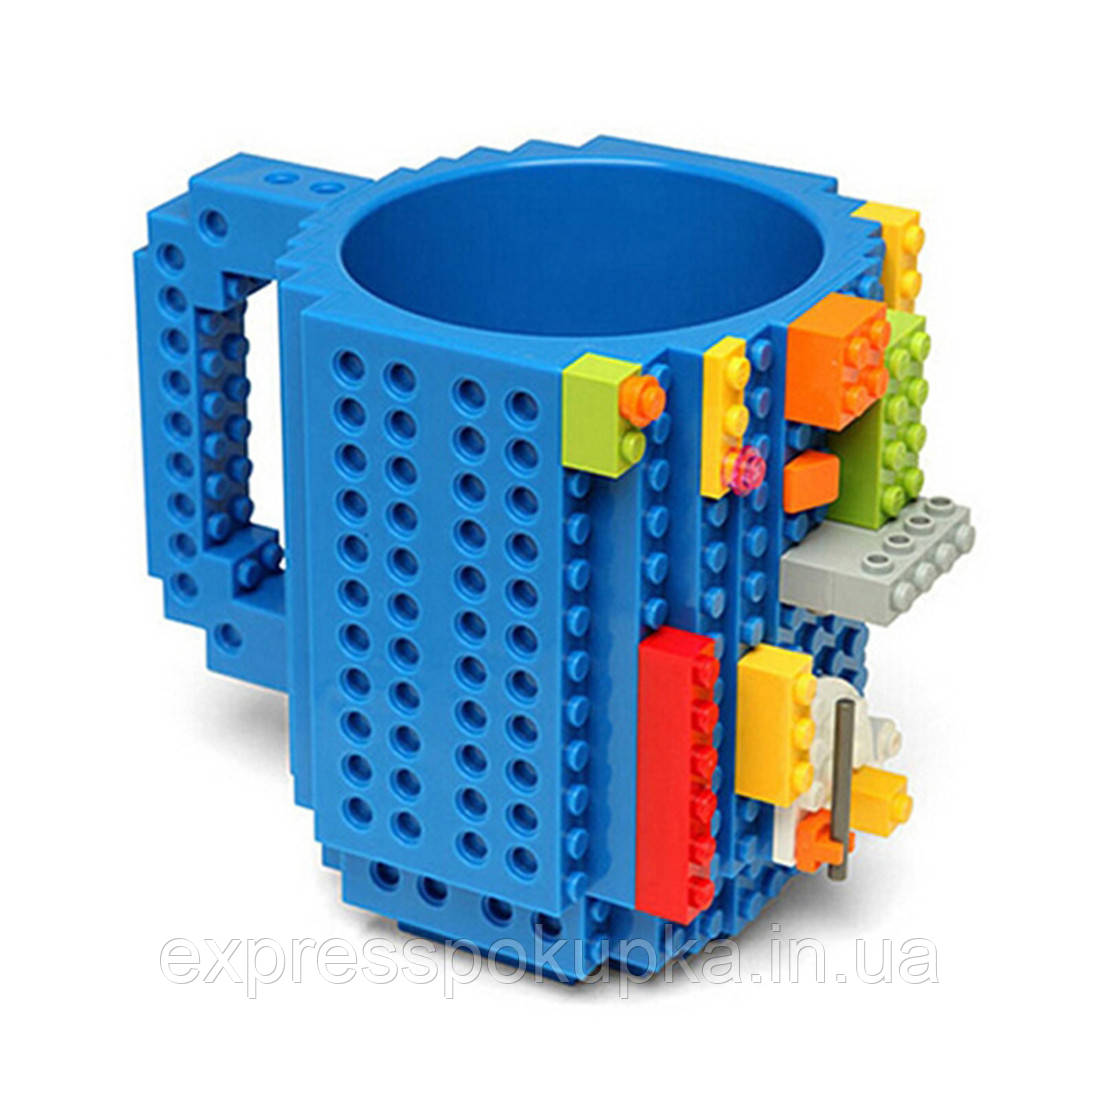 Дитяча чашка Build On для гри з Lego  ⁇  Кухоль конструктор для Лего Синя, фото 1